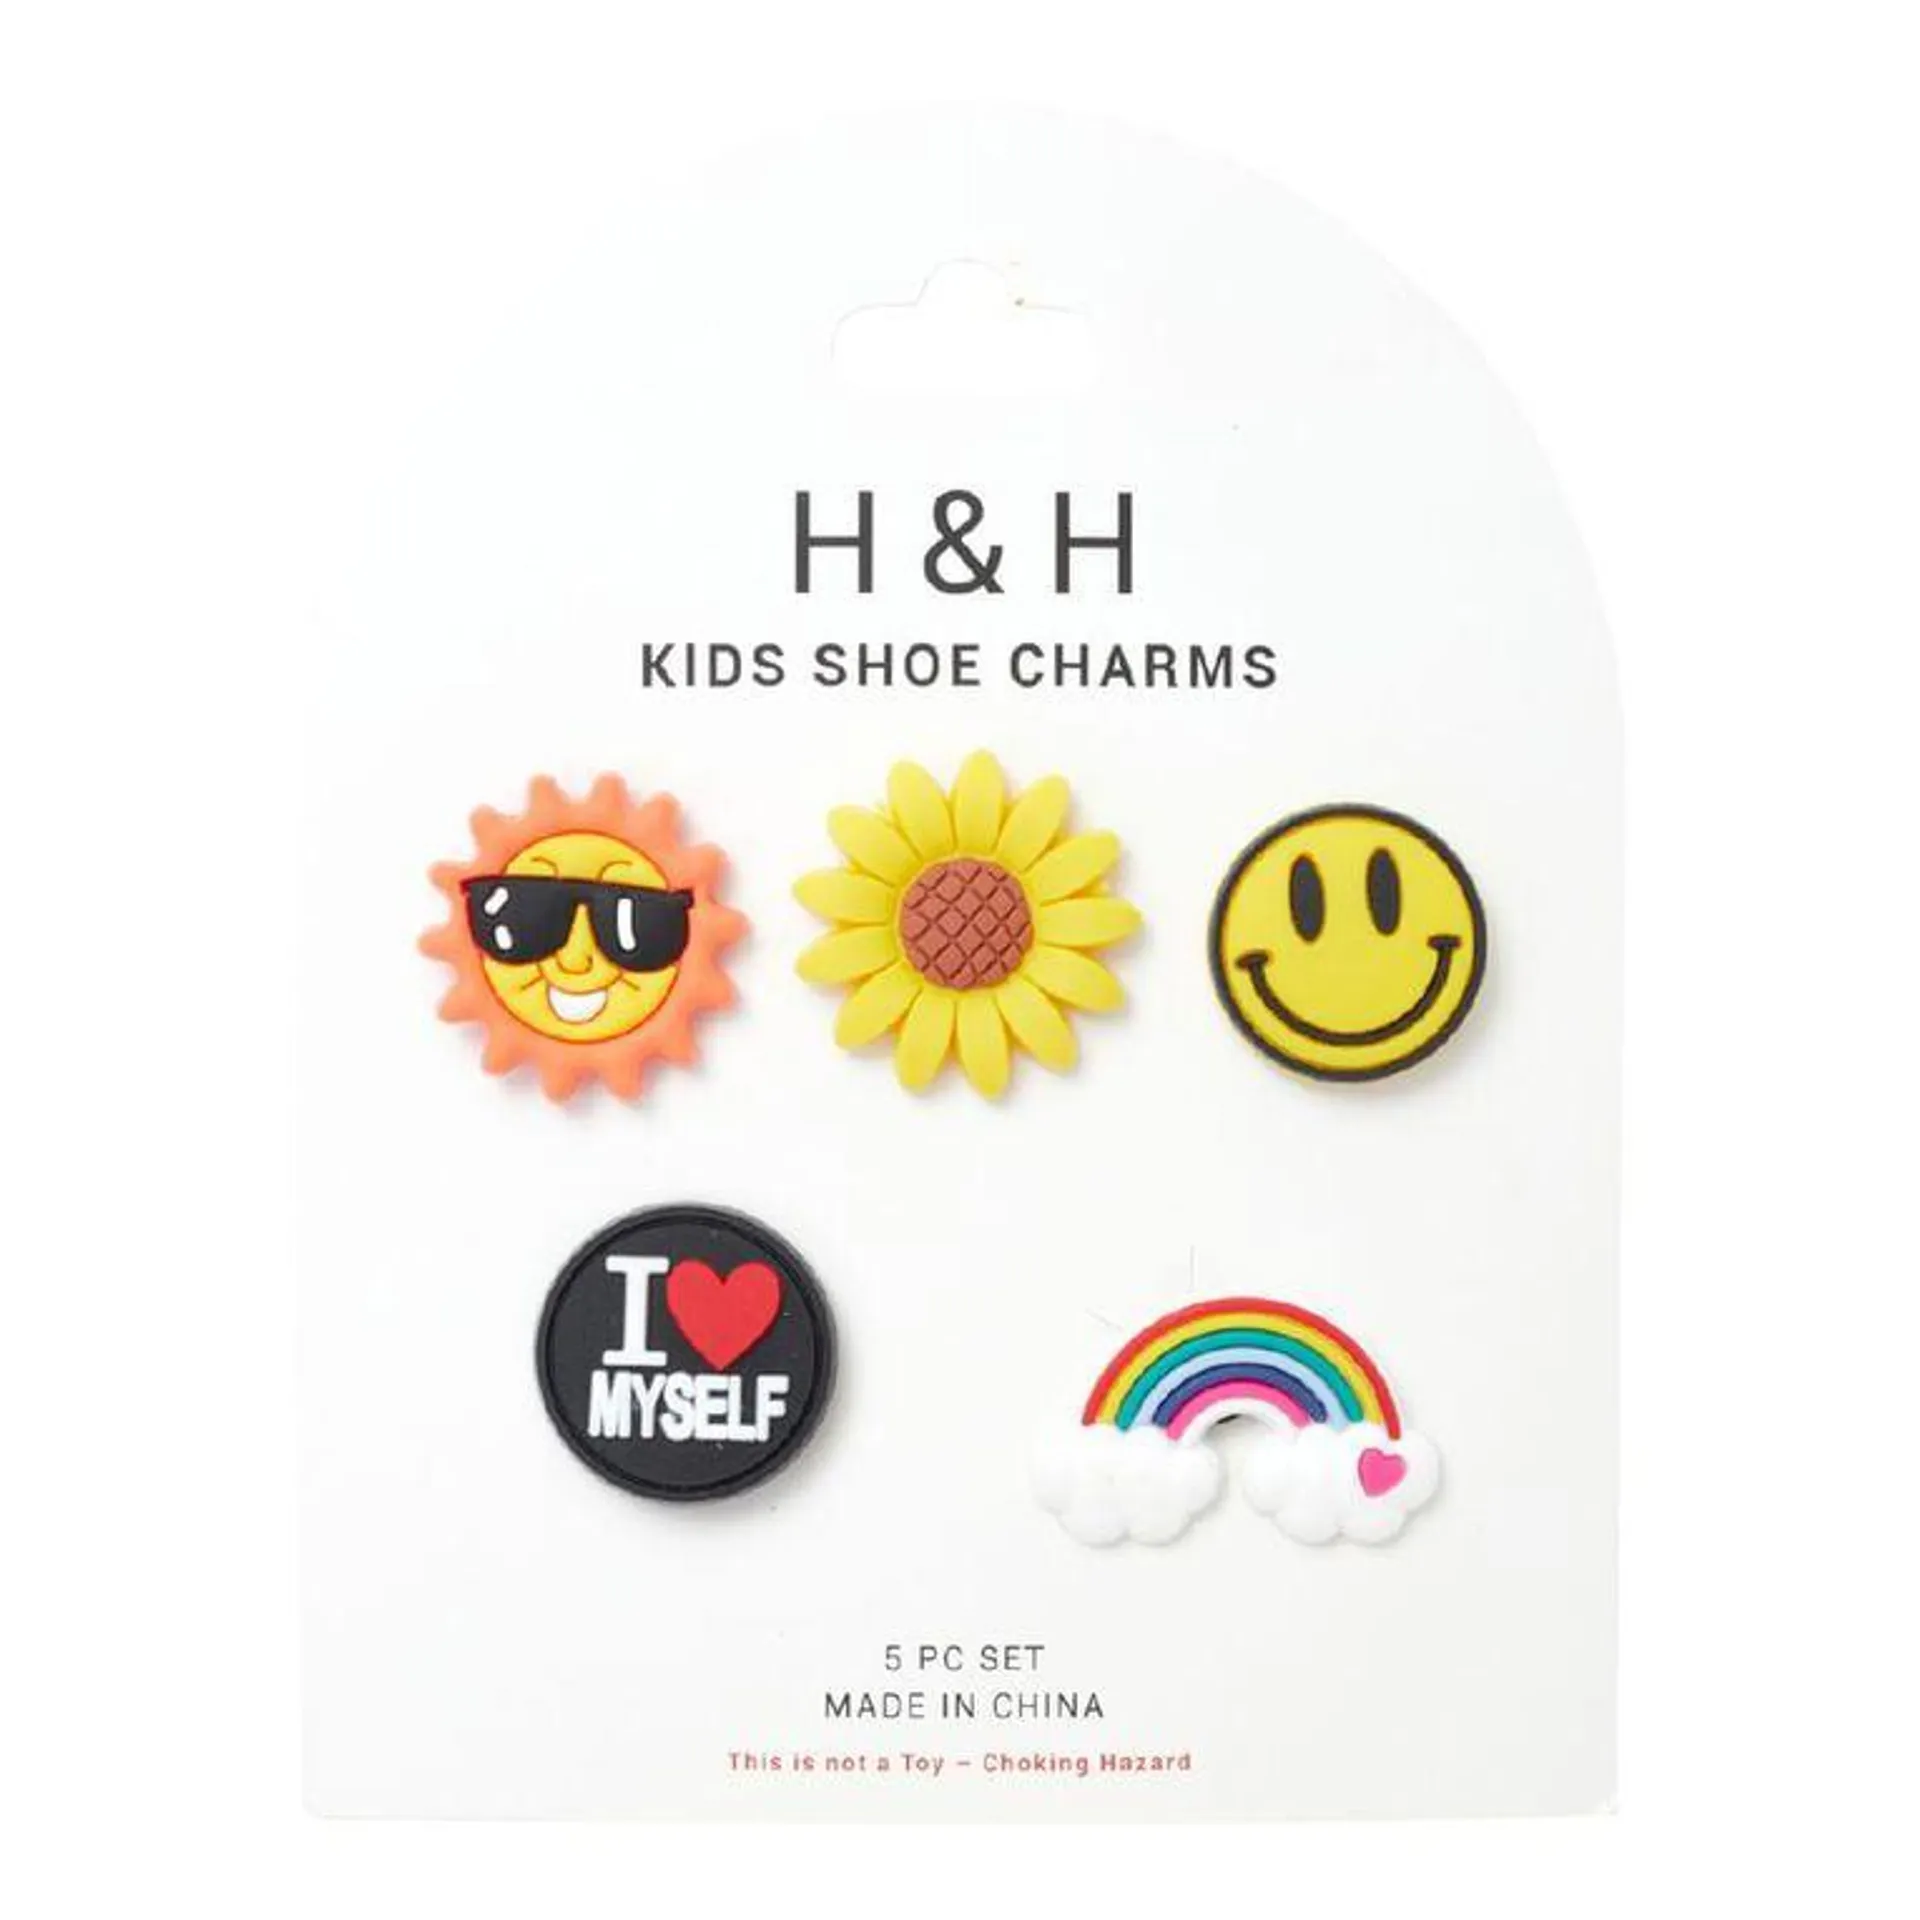 H&H Kids' Shoe Charms